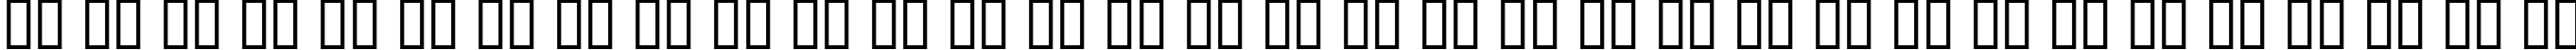 Пример написания русского алфавита шрифтом Berlin Sans FB Demi Bold